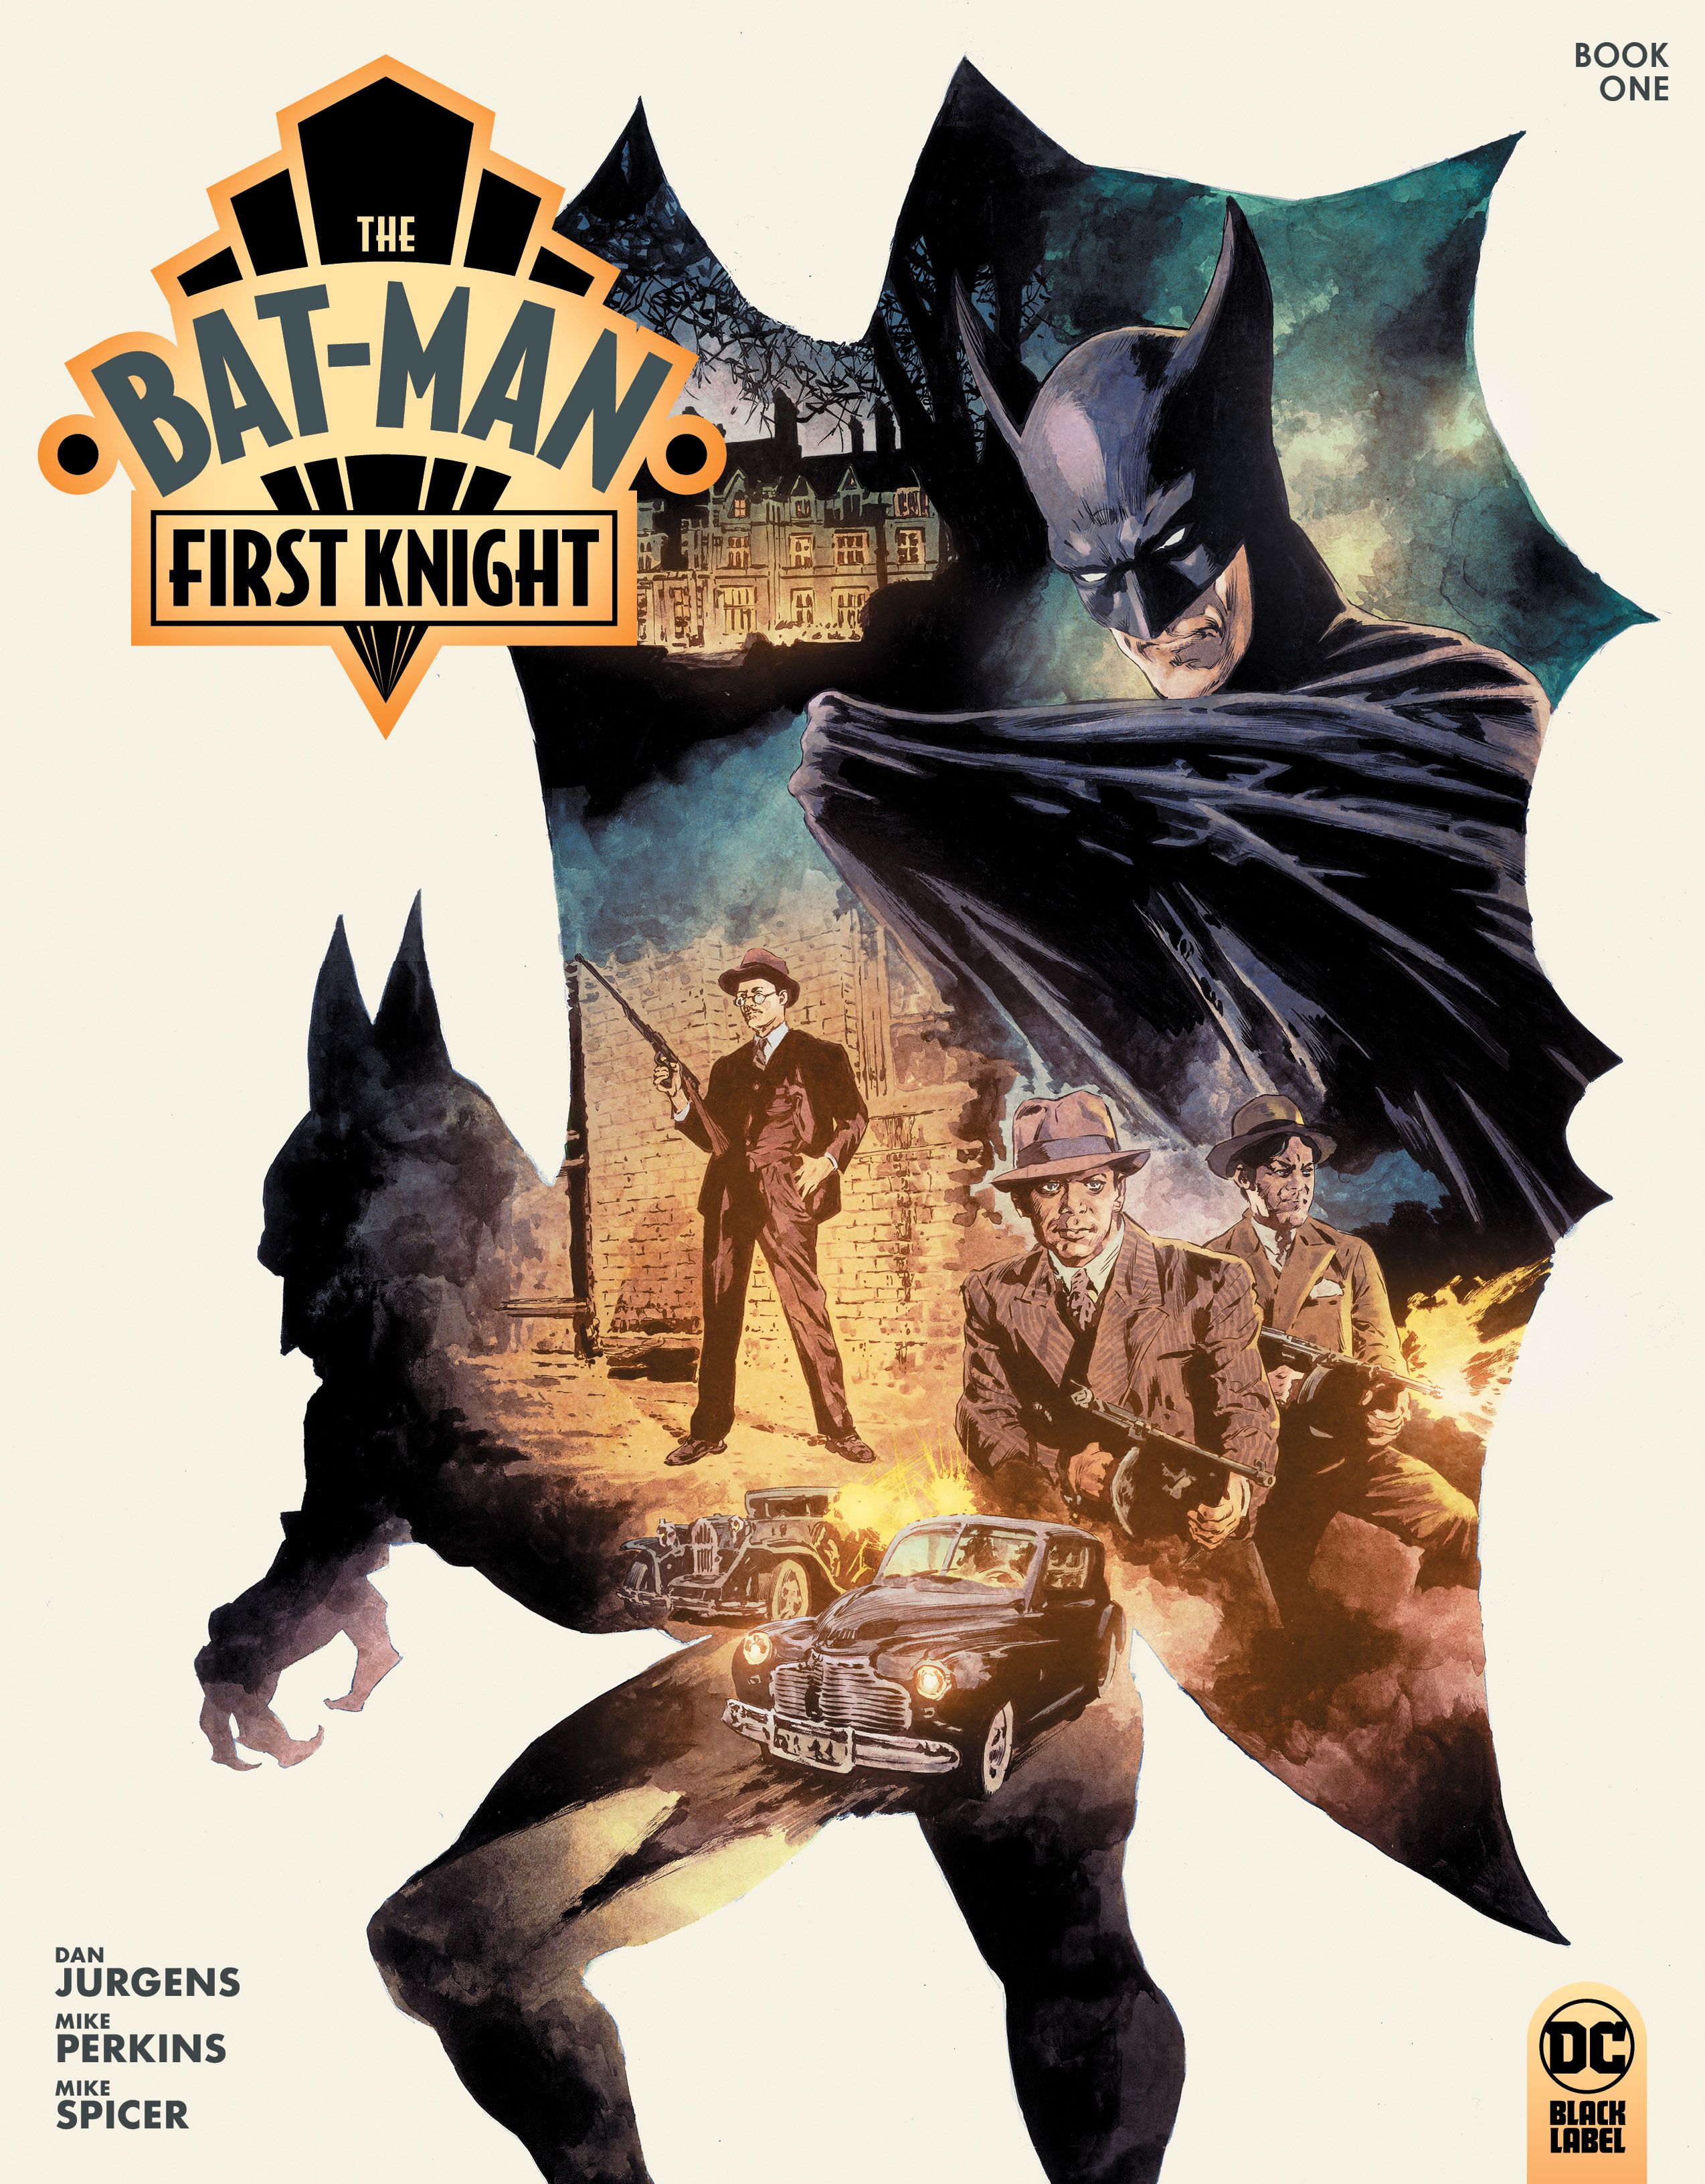 The Bat-Man: First Knight #1 Comic